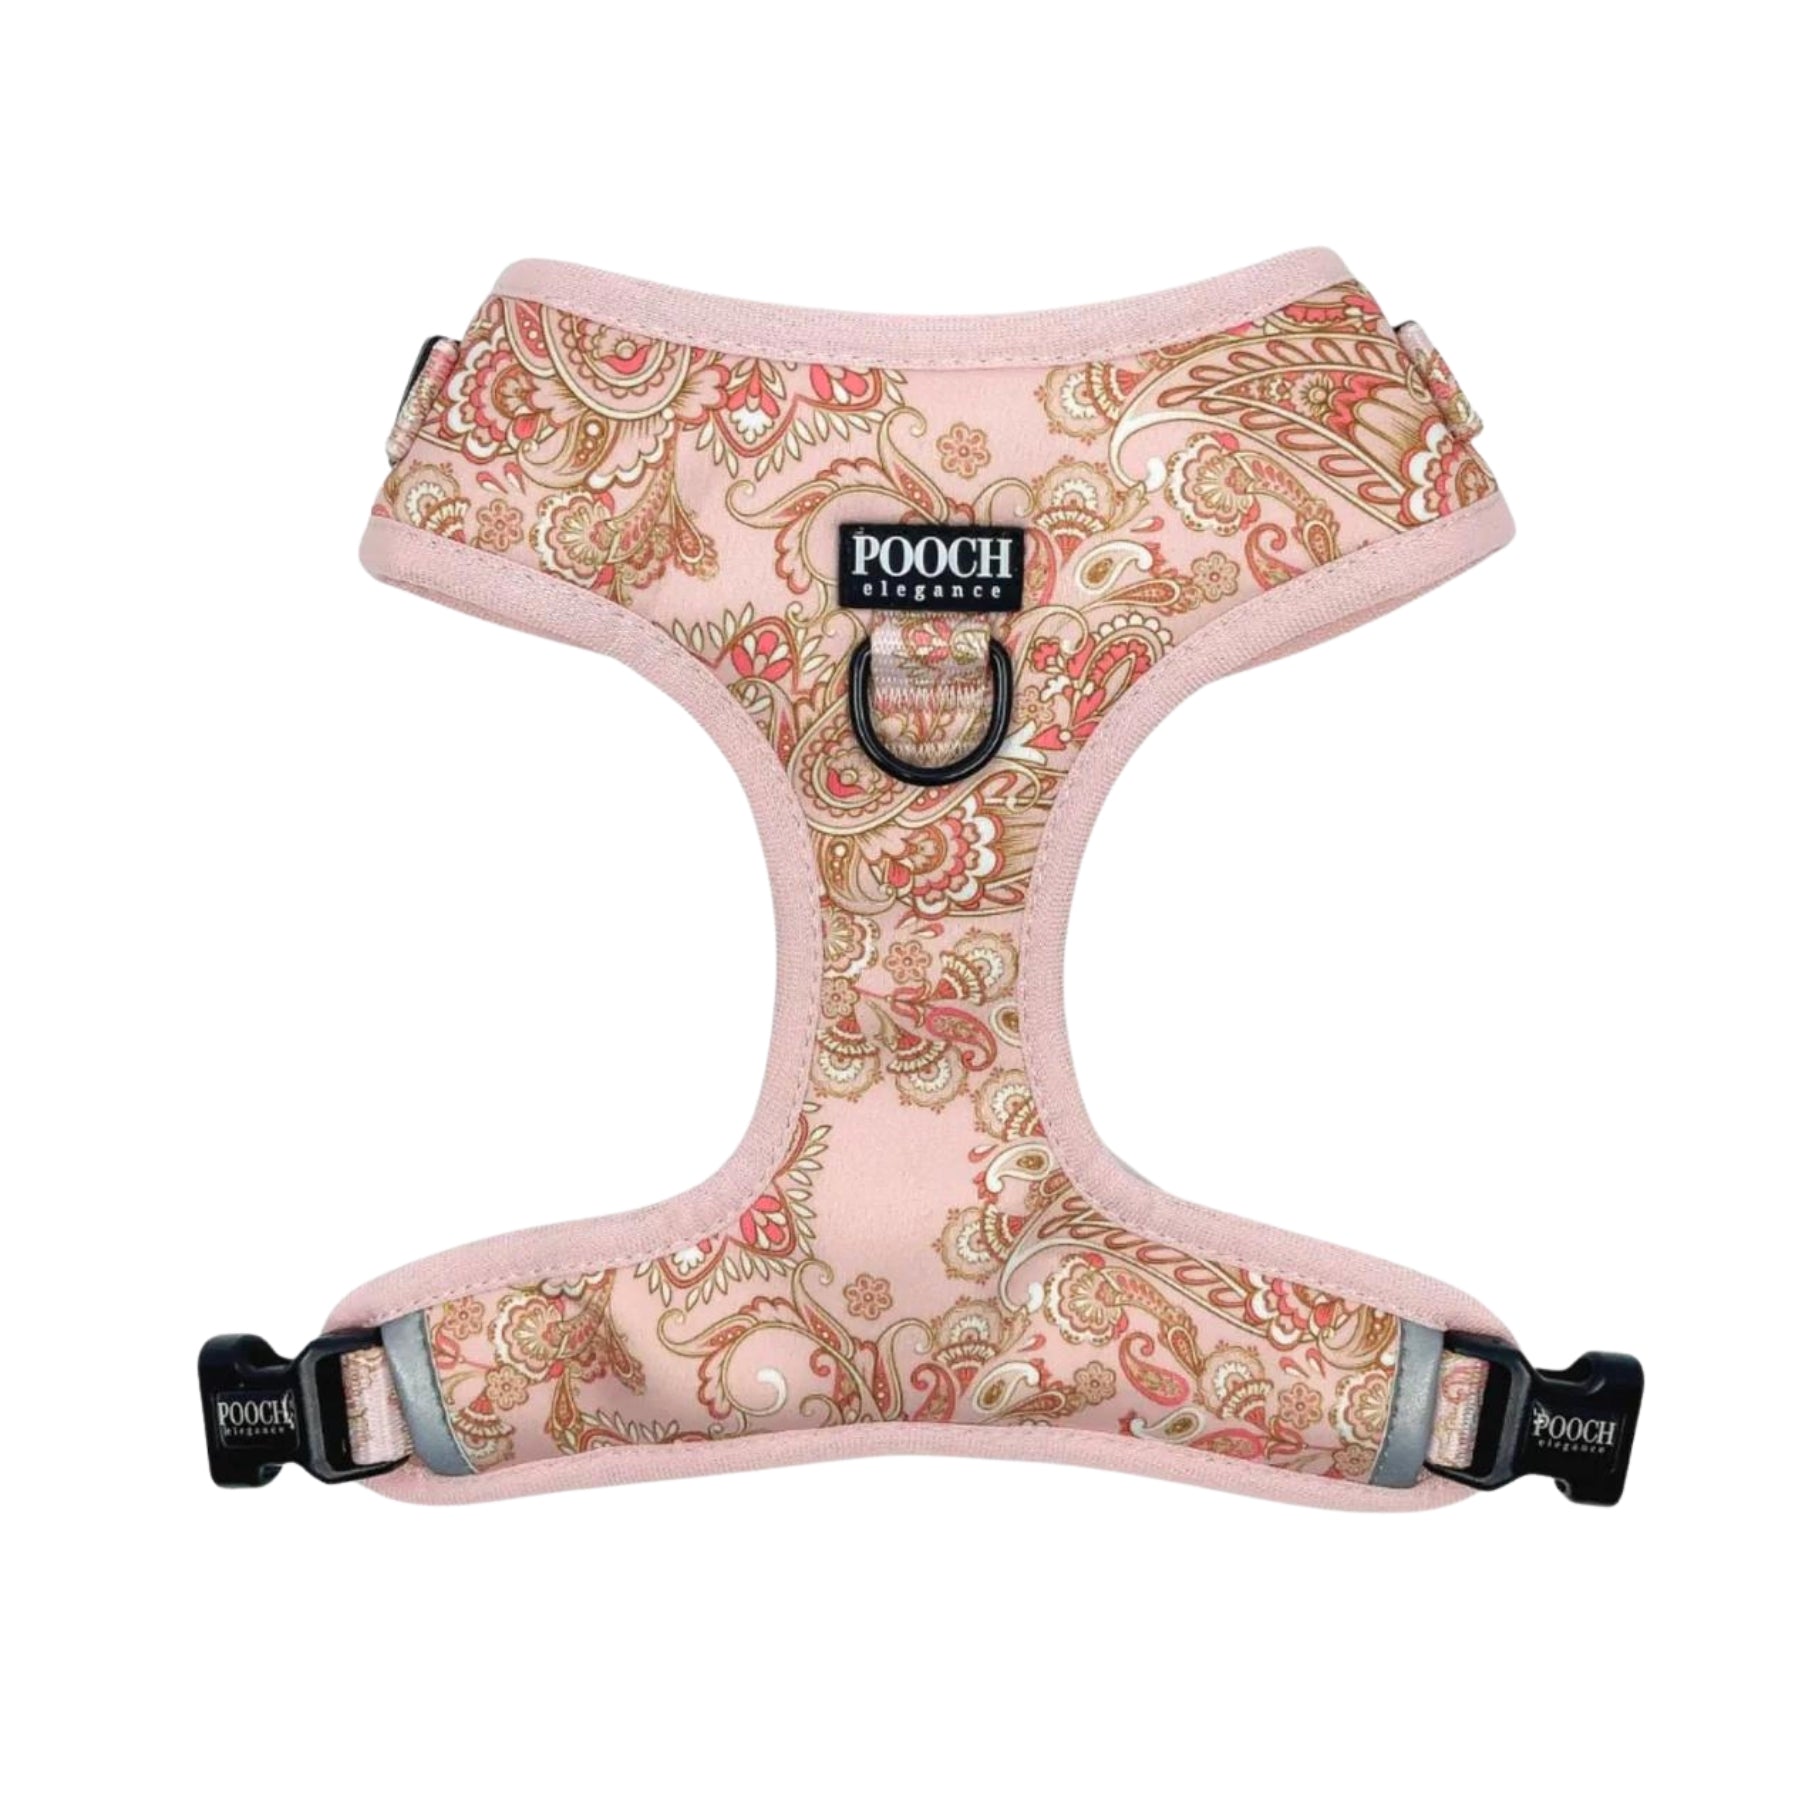 Paisley Blush Adjustable Harness - Pooch Luxury